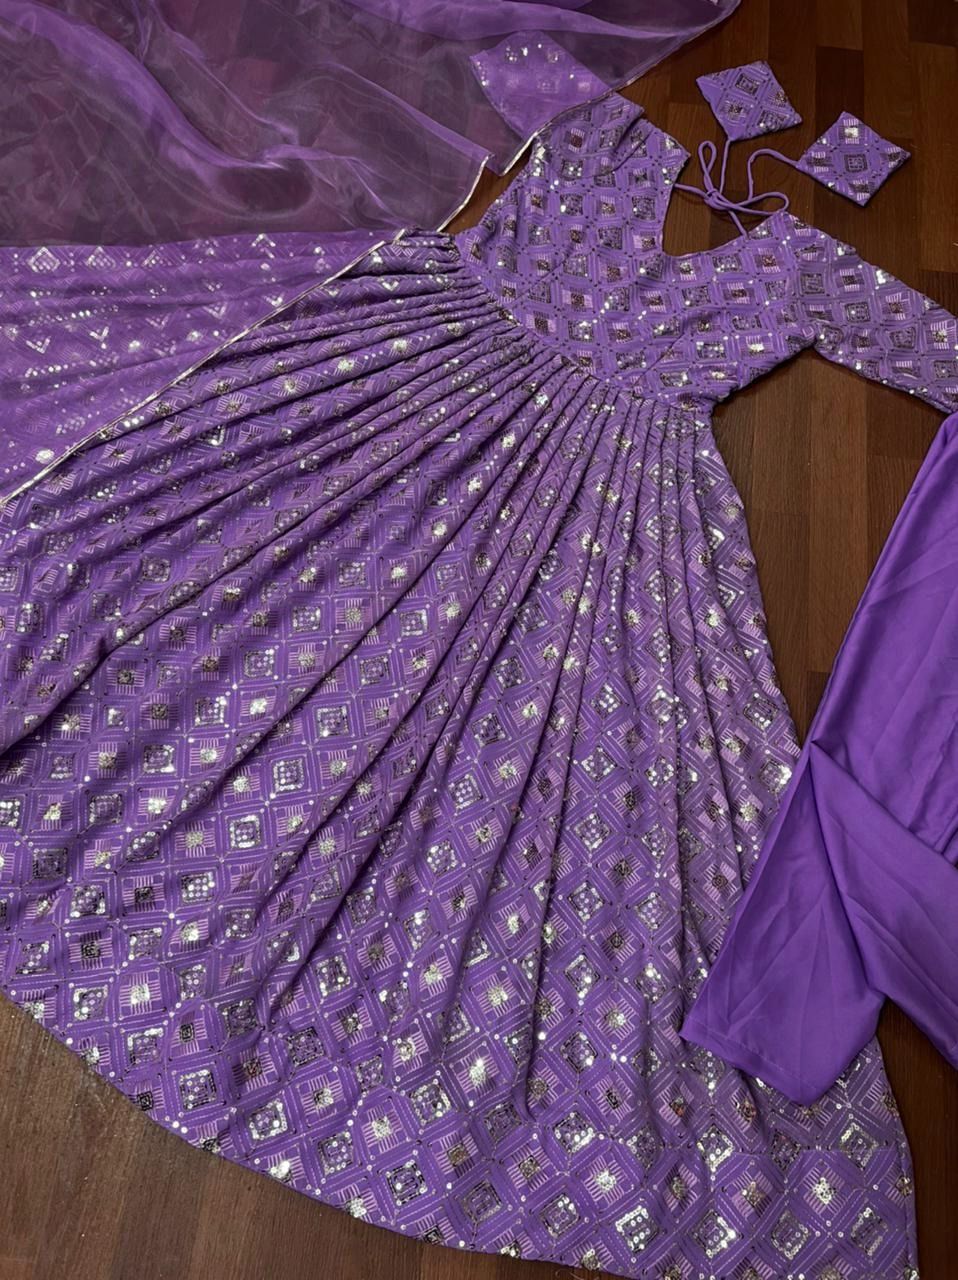 Purple Color Heavy Designer Salwar Suit Buy Now